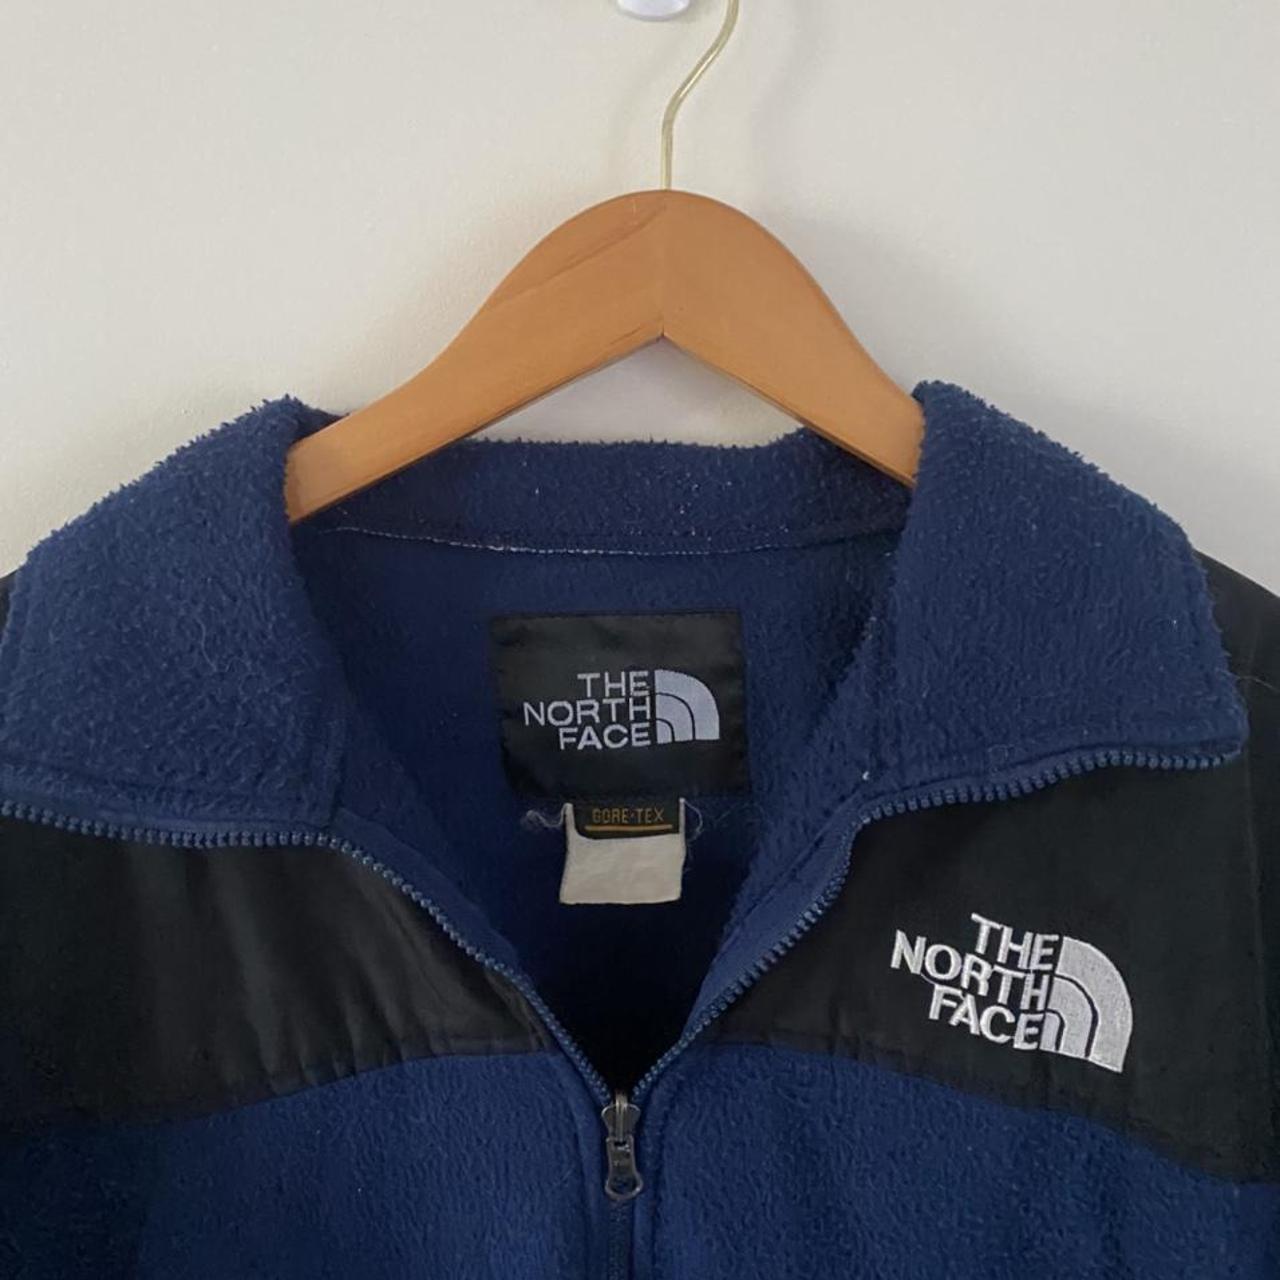 Product Image 2 - North Face denali fleece jacket
Gore-Tex
No